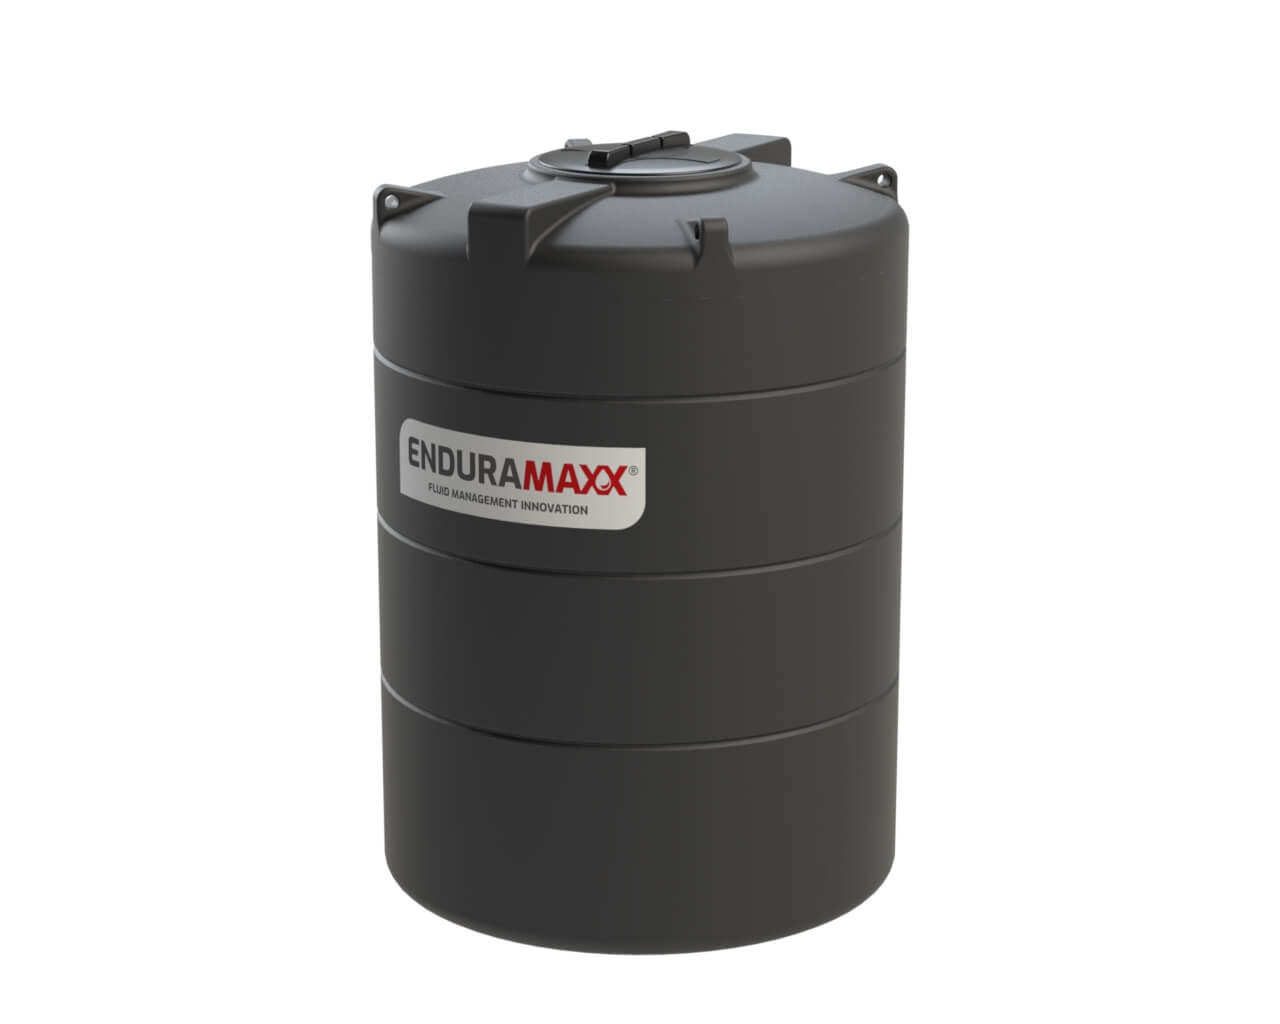 Enduramaxx 172106 1500 Litre Potable Drinking Water Tank